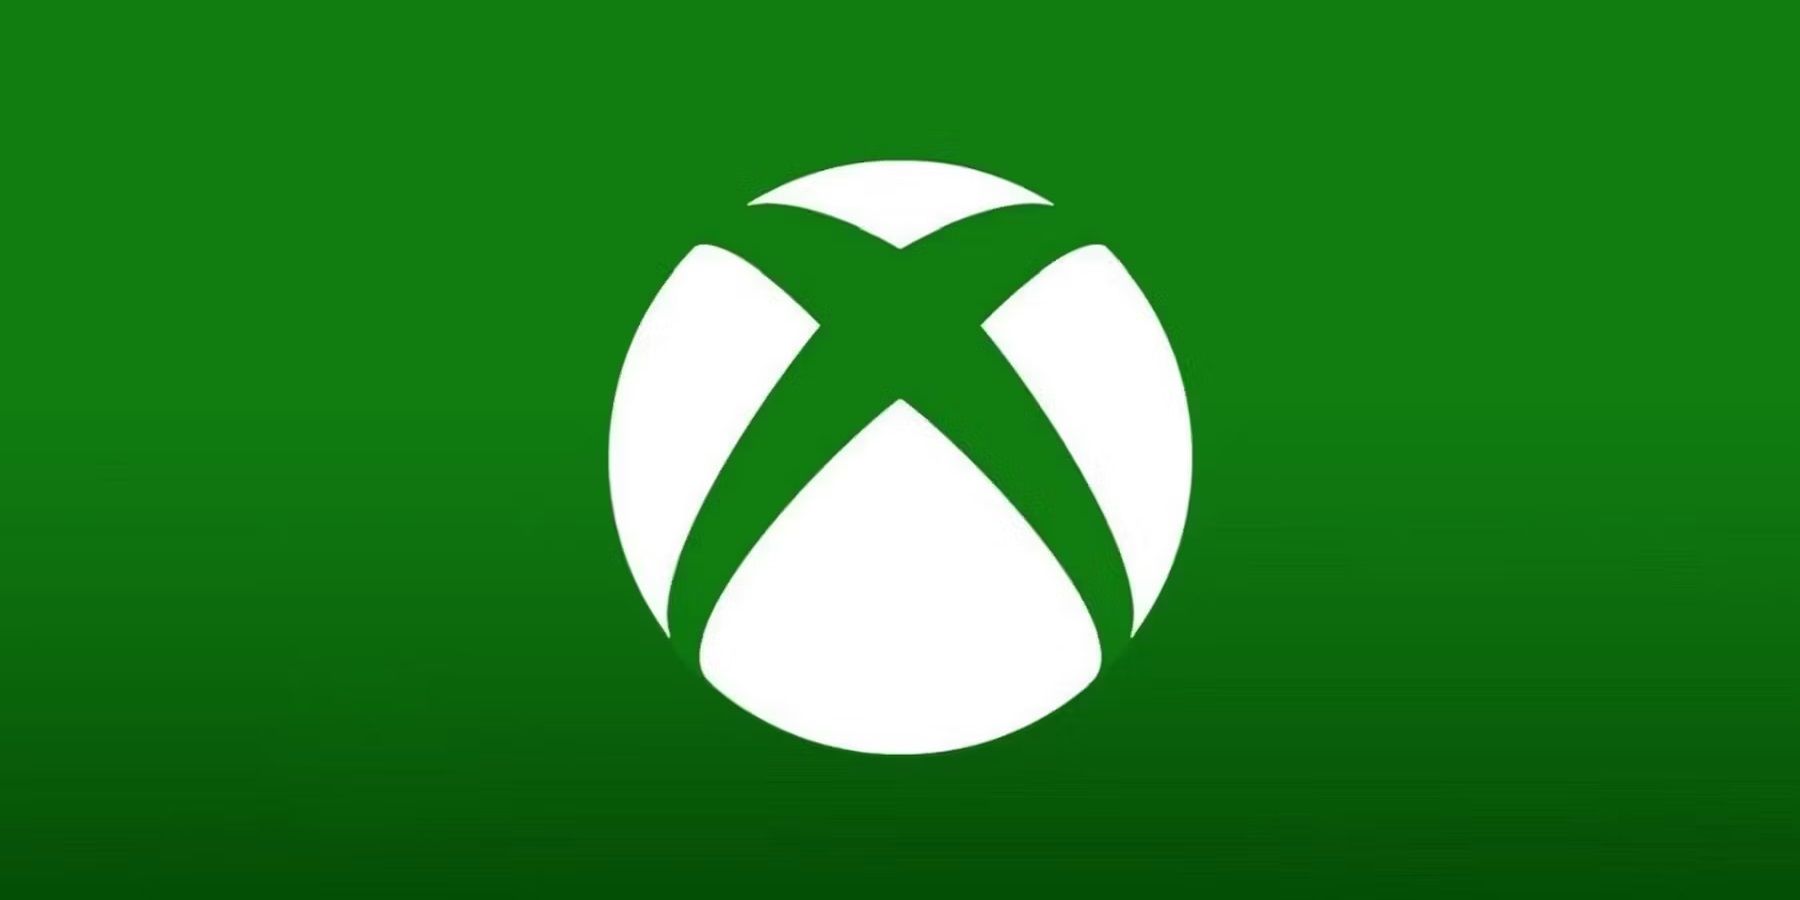 xbox logo green background